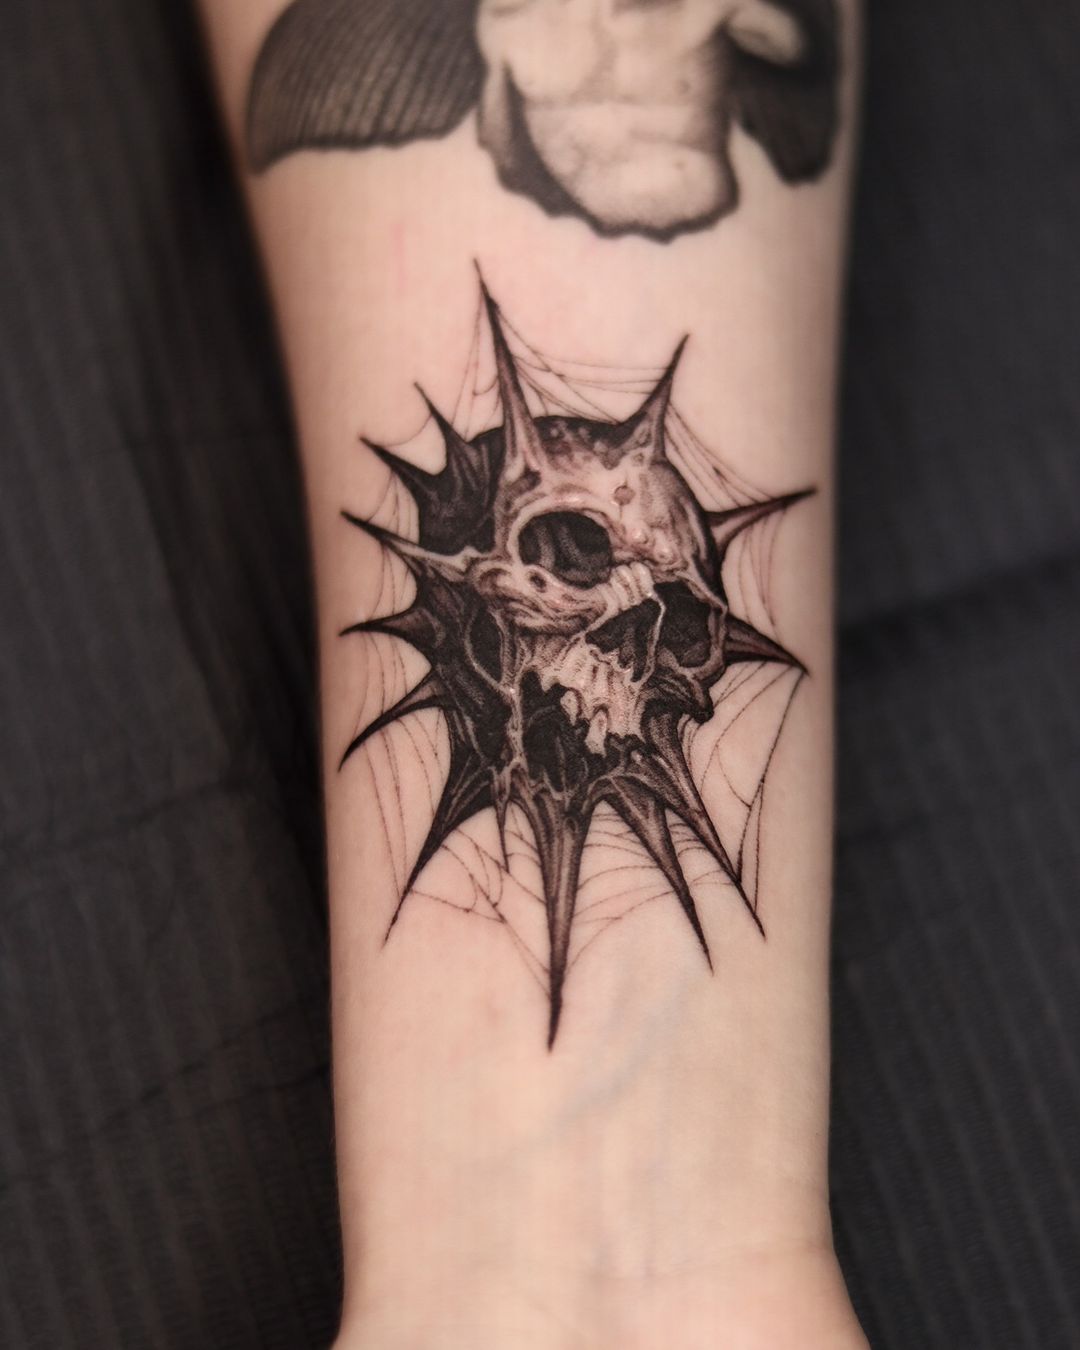 Skull design by apso tattoo